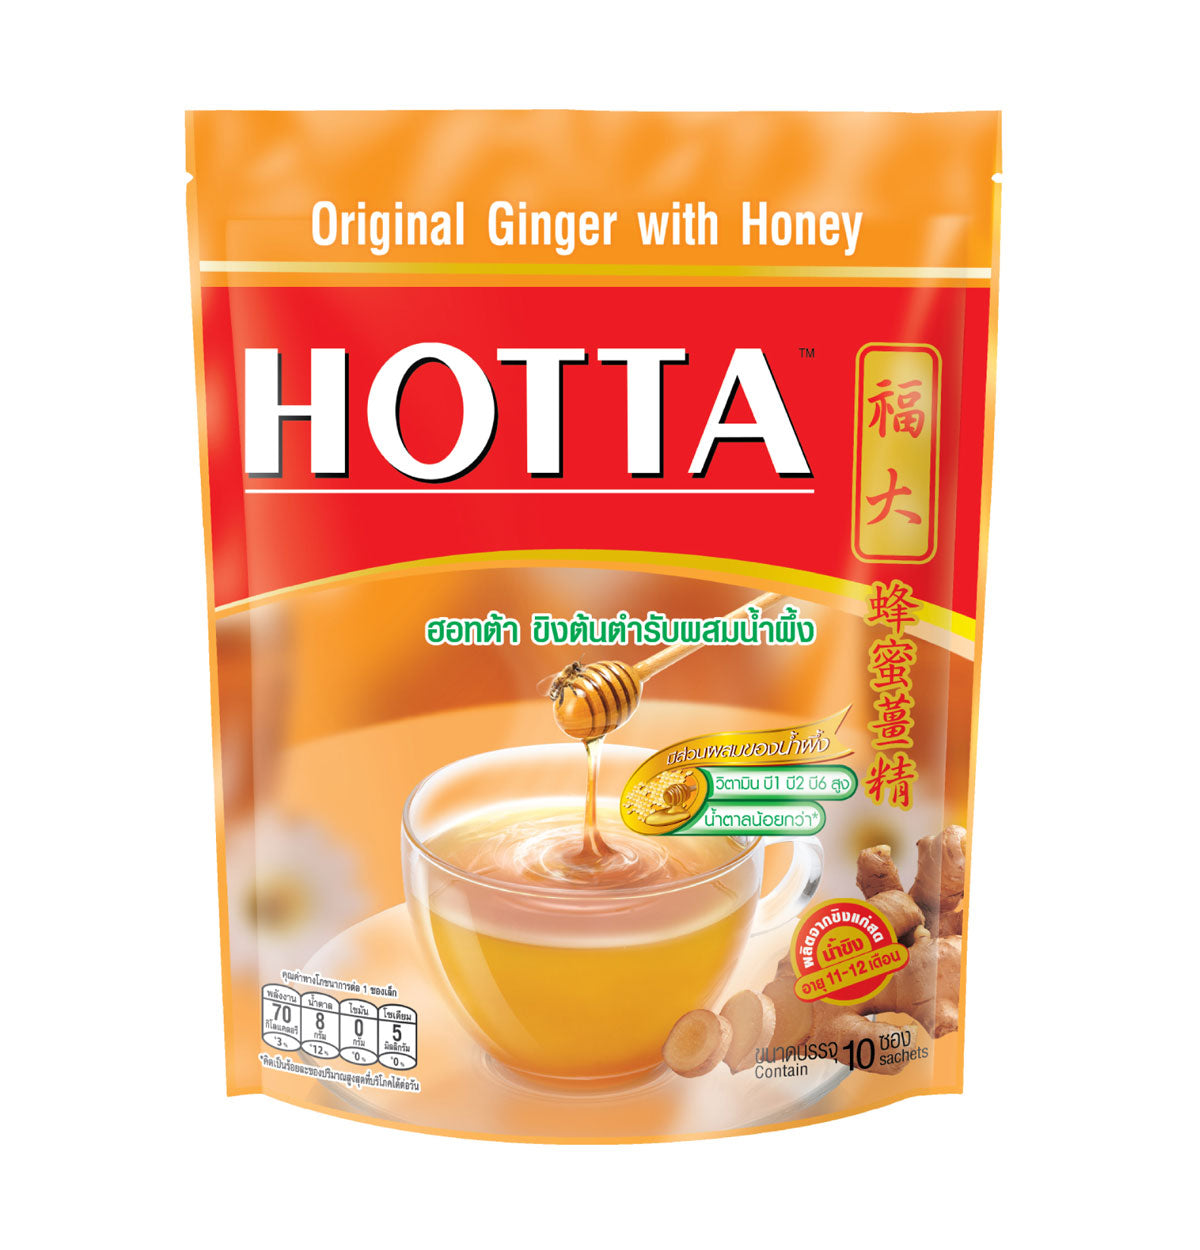 Hotta Original Ginger with Honey Instant Drink, 180g